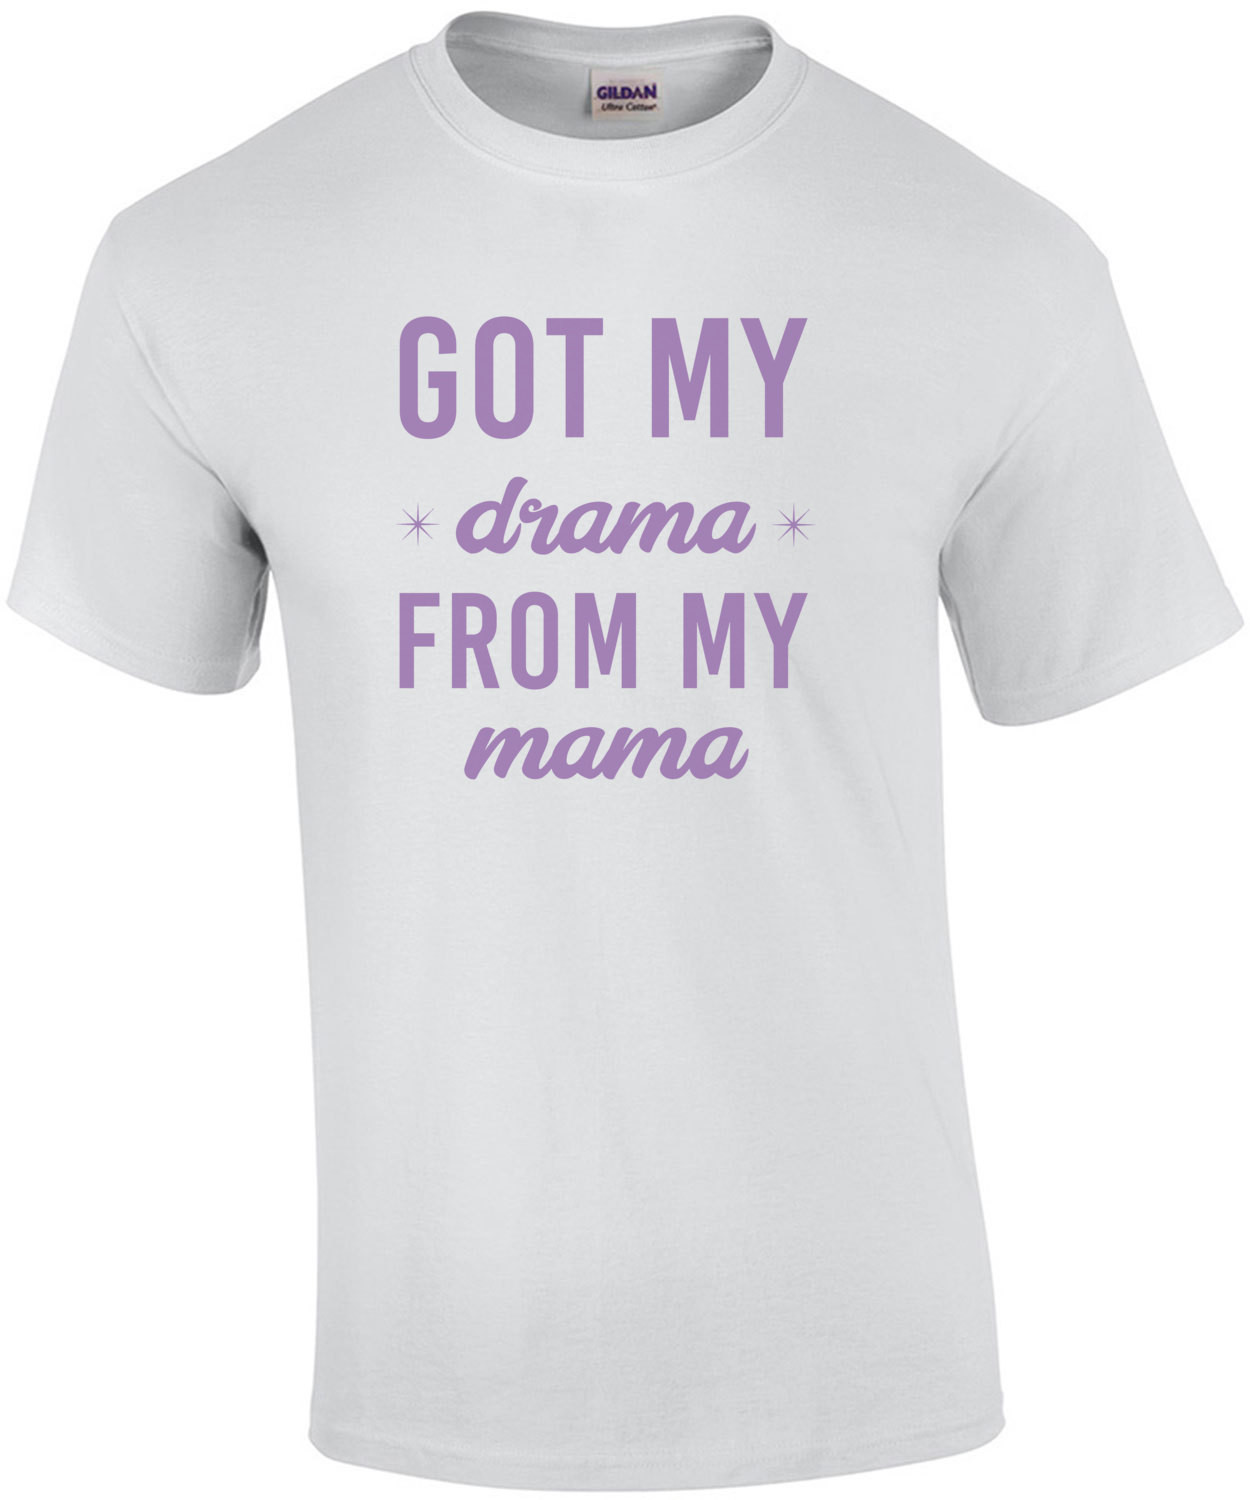 Got my dama from my mama - funny t-shirt